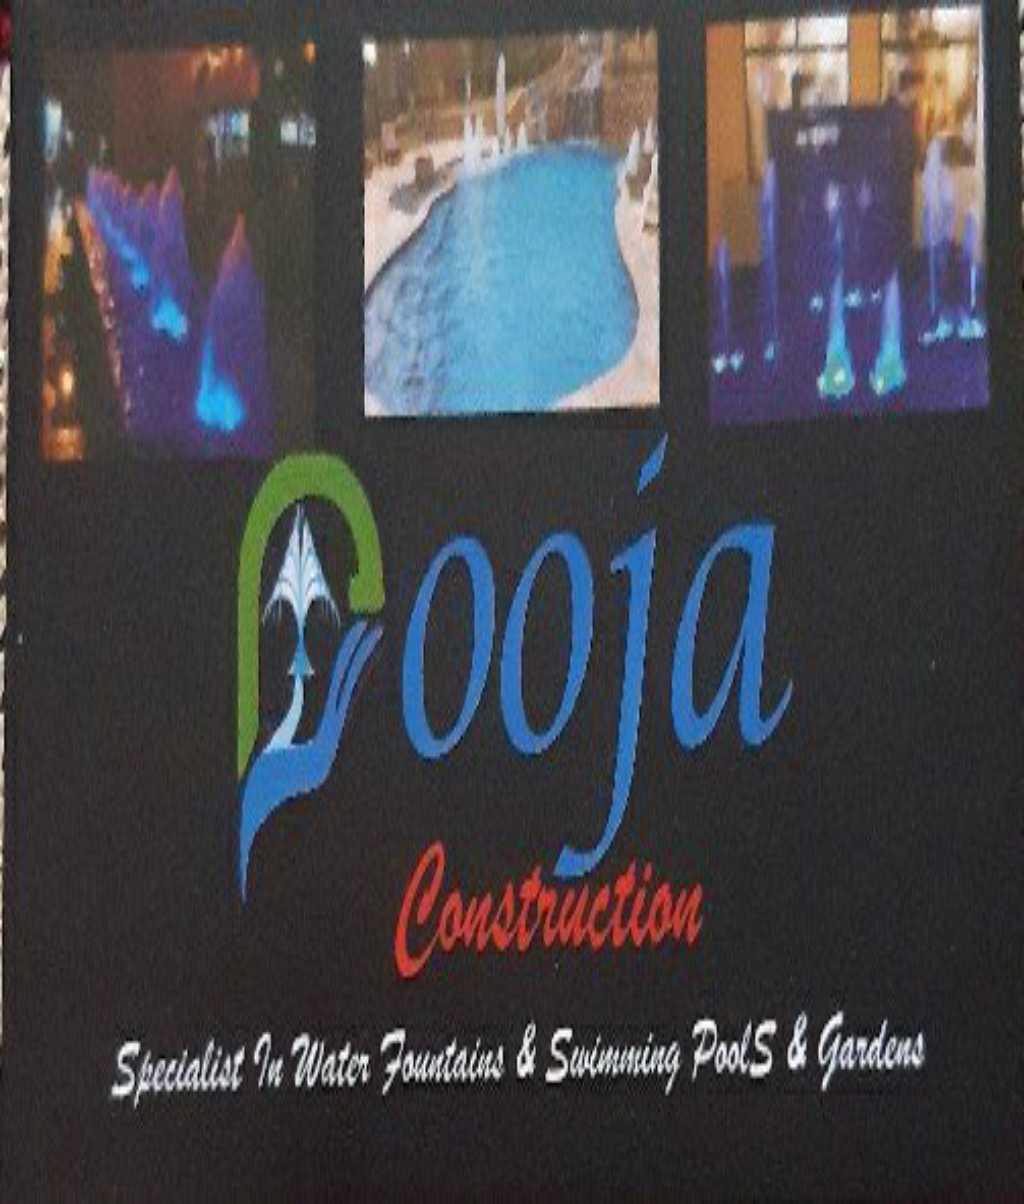 Pooja Construction